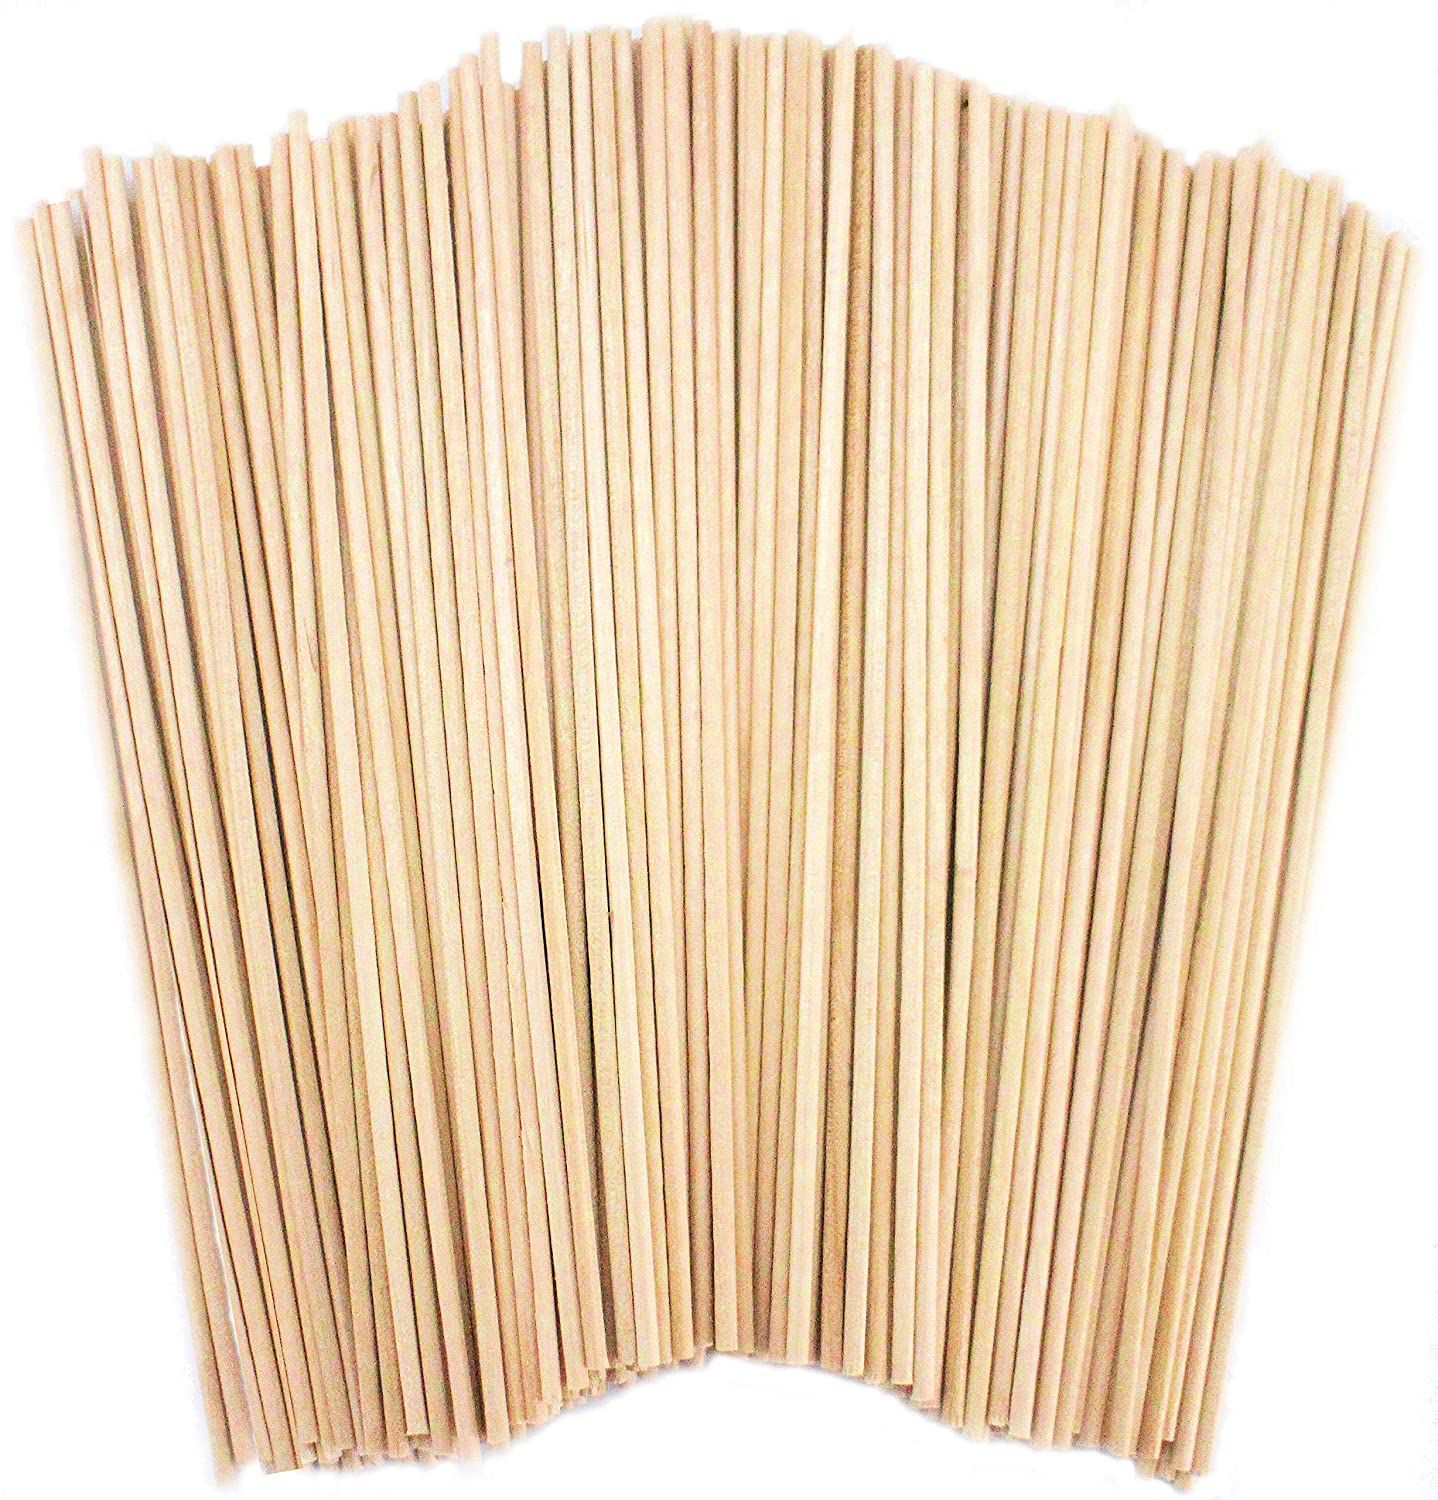 Wood Sticks 🪵 || اعواد خشب